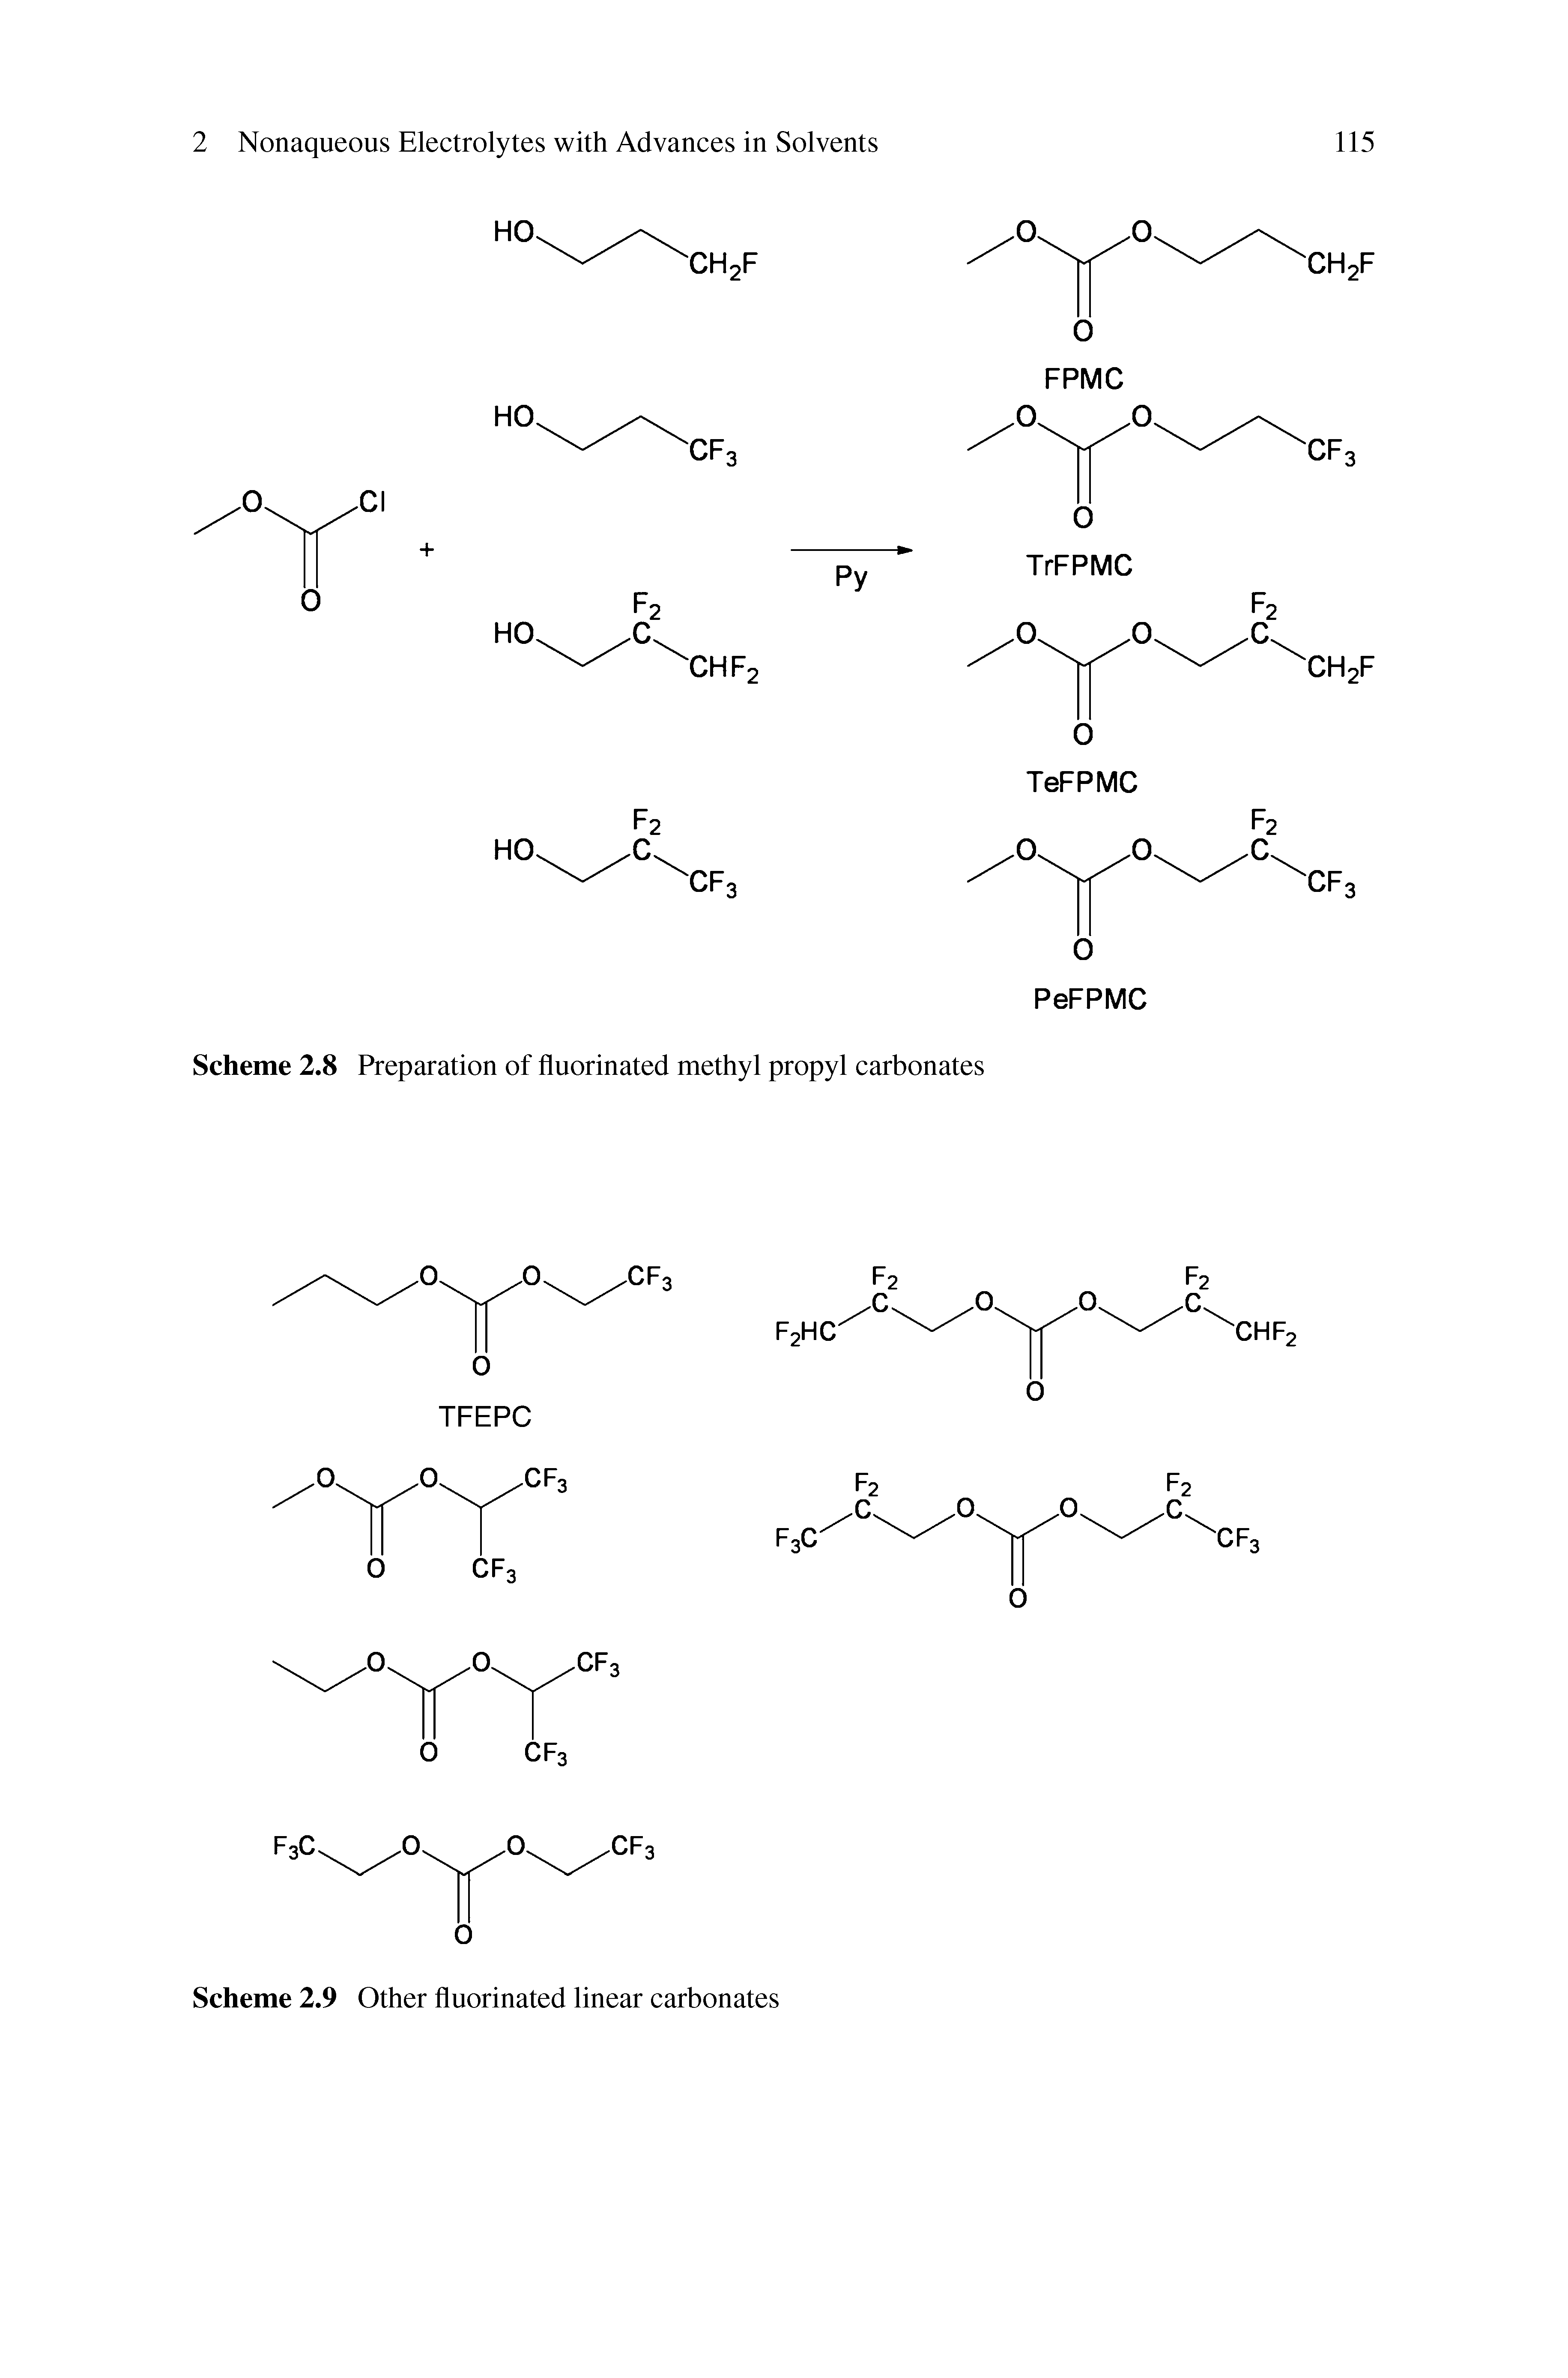 Scheme 2.8 Preparation of fluorinated methyl propyl carbonates...